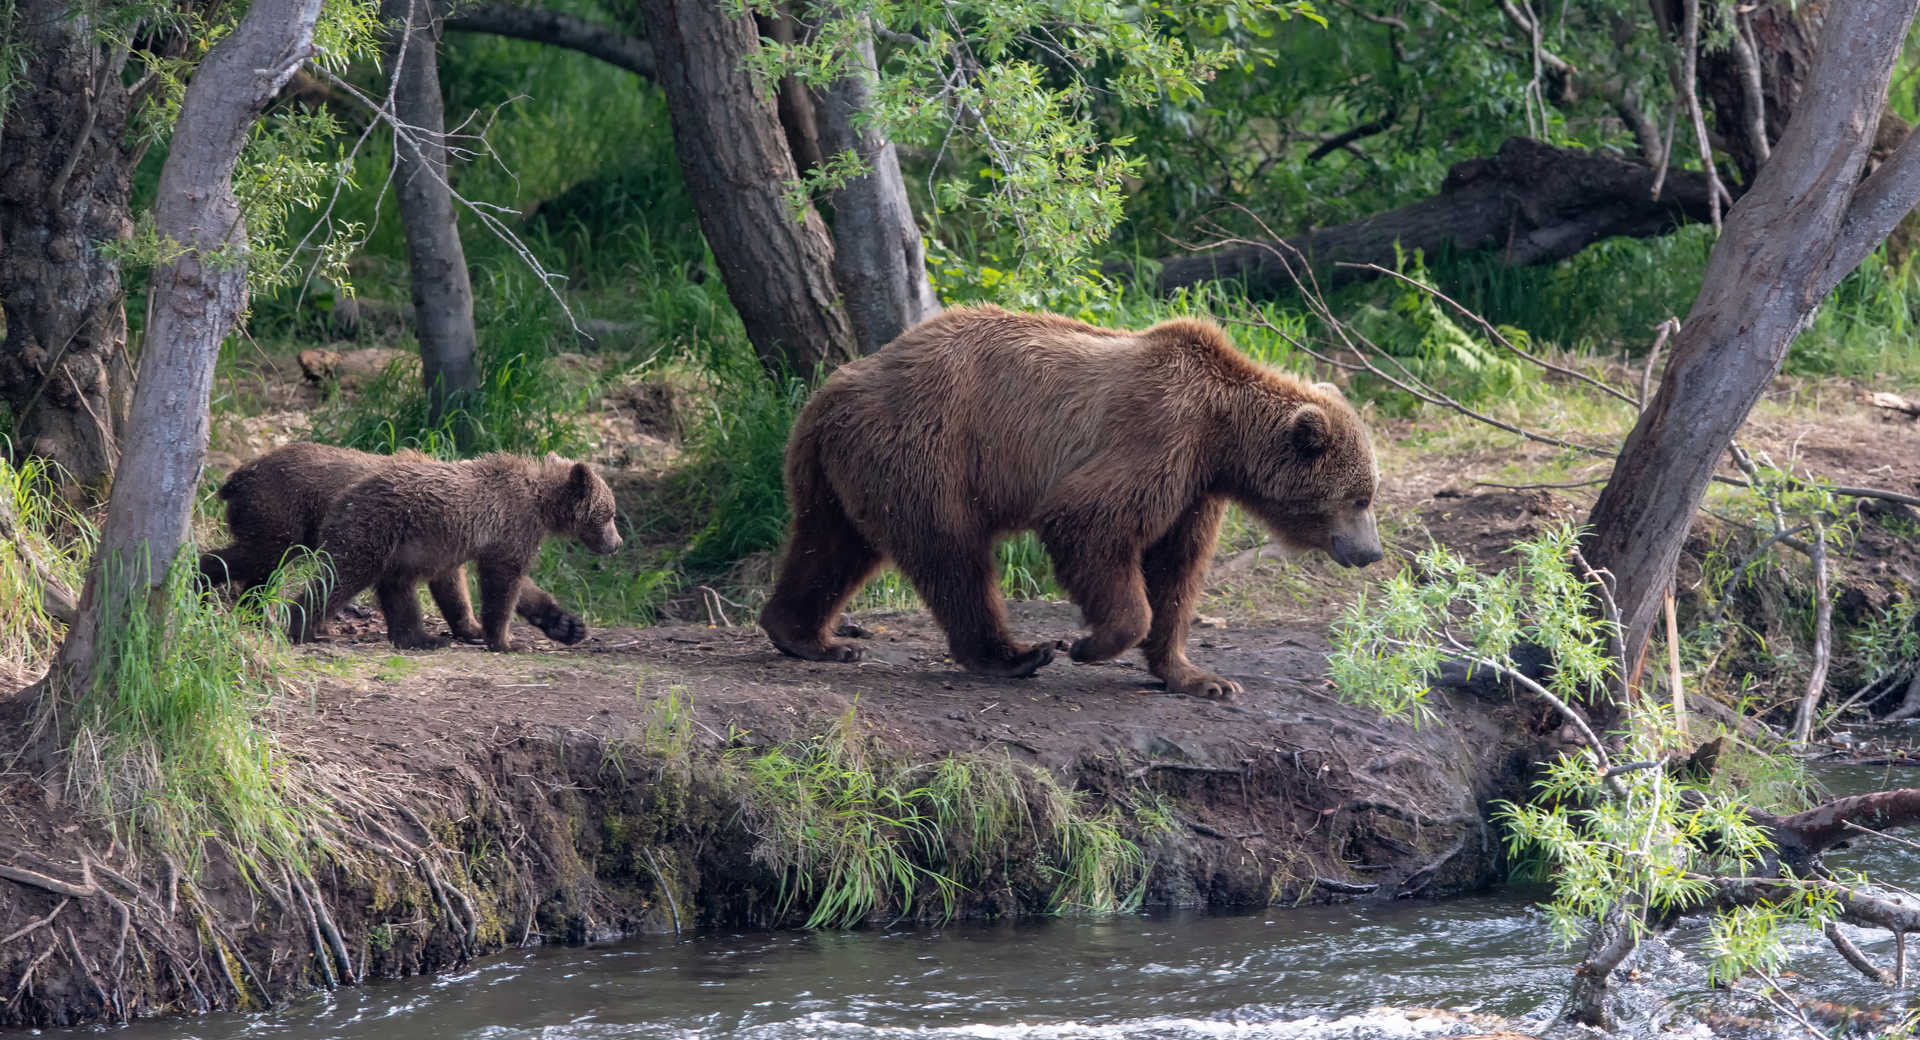 Ours bruns en Russie au Kamtchatka